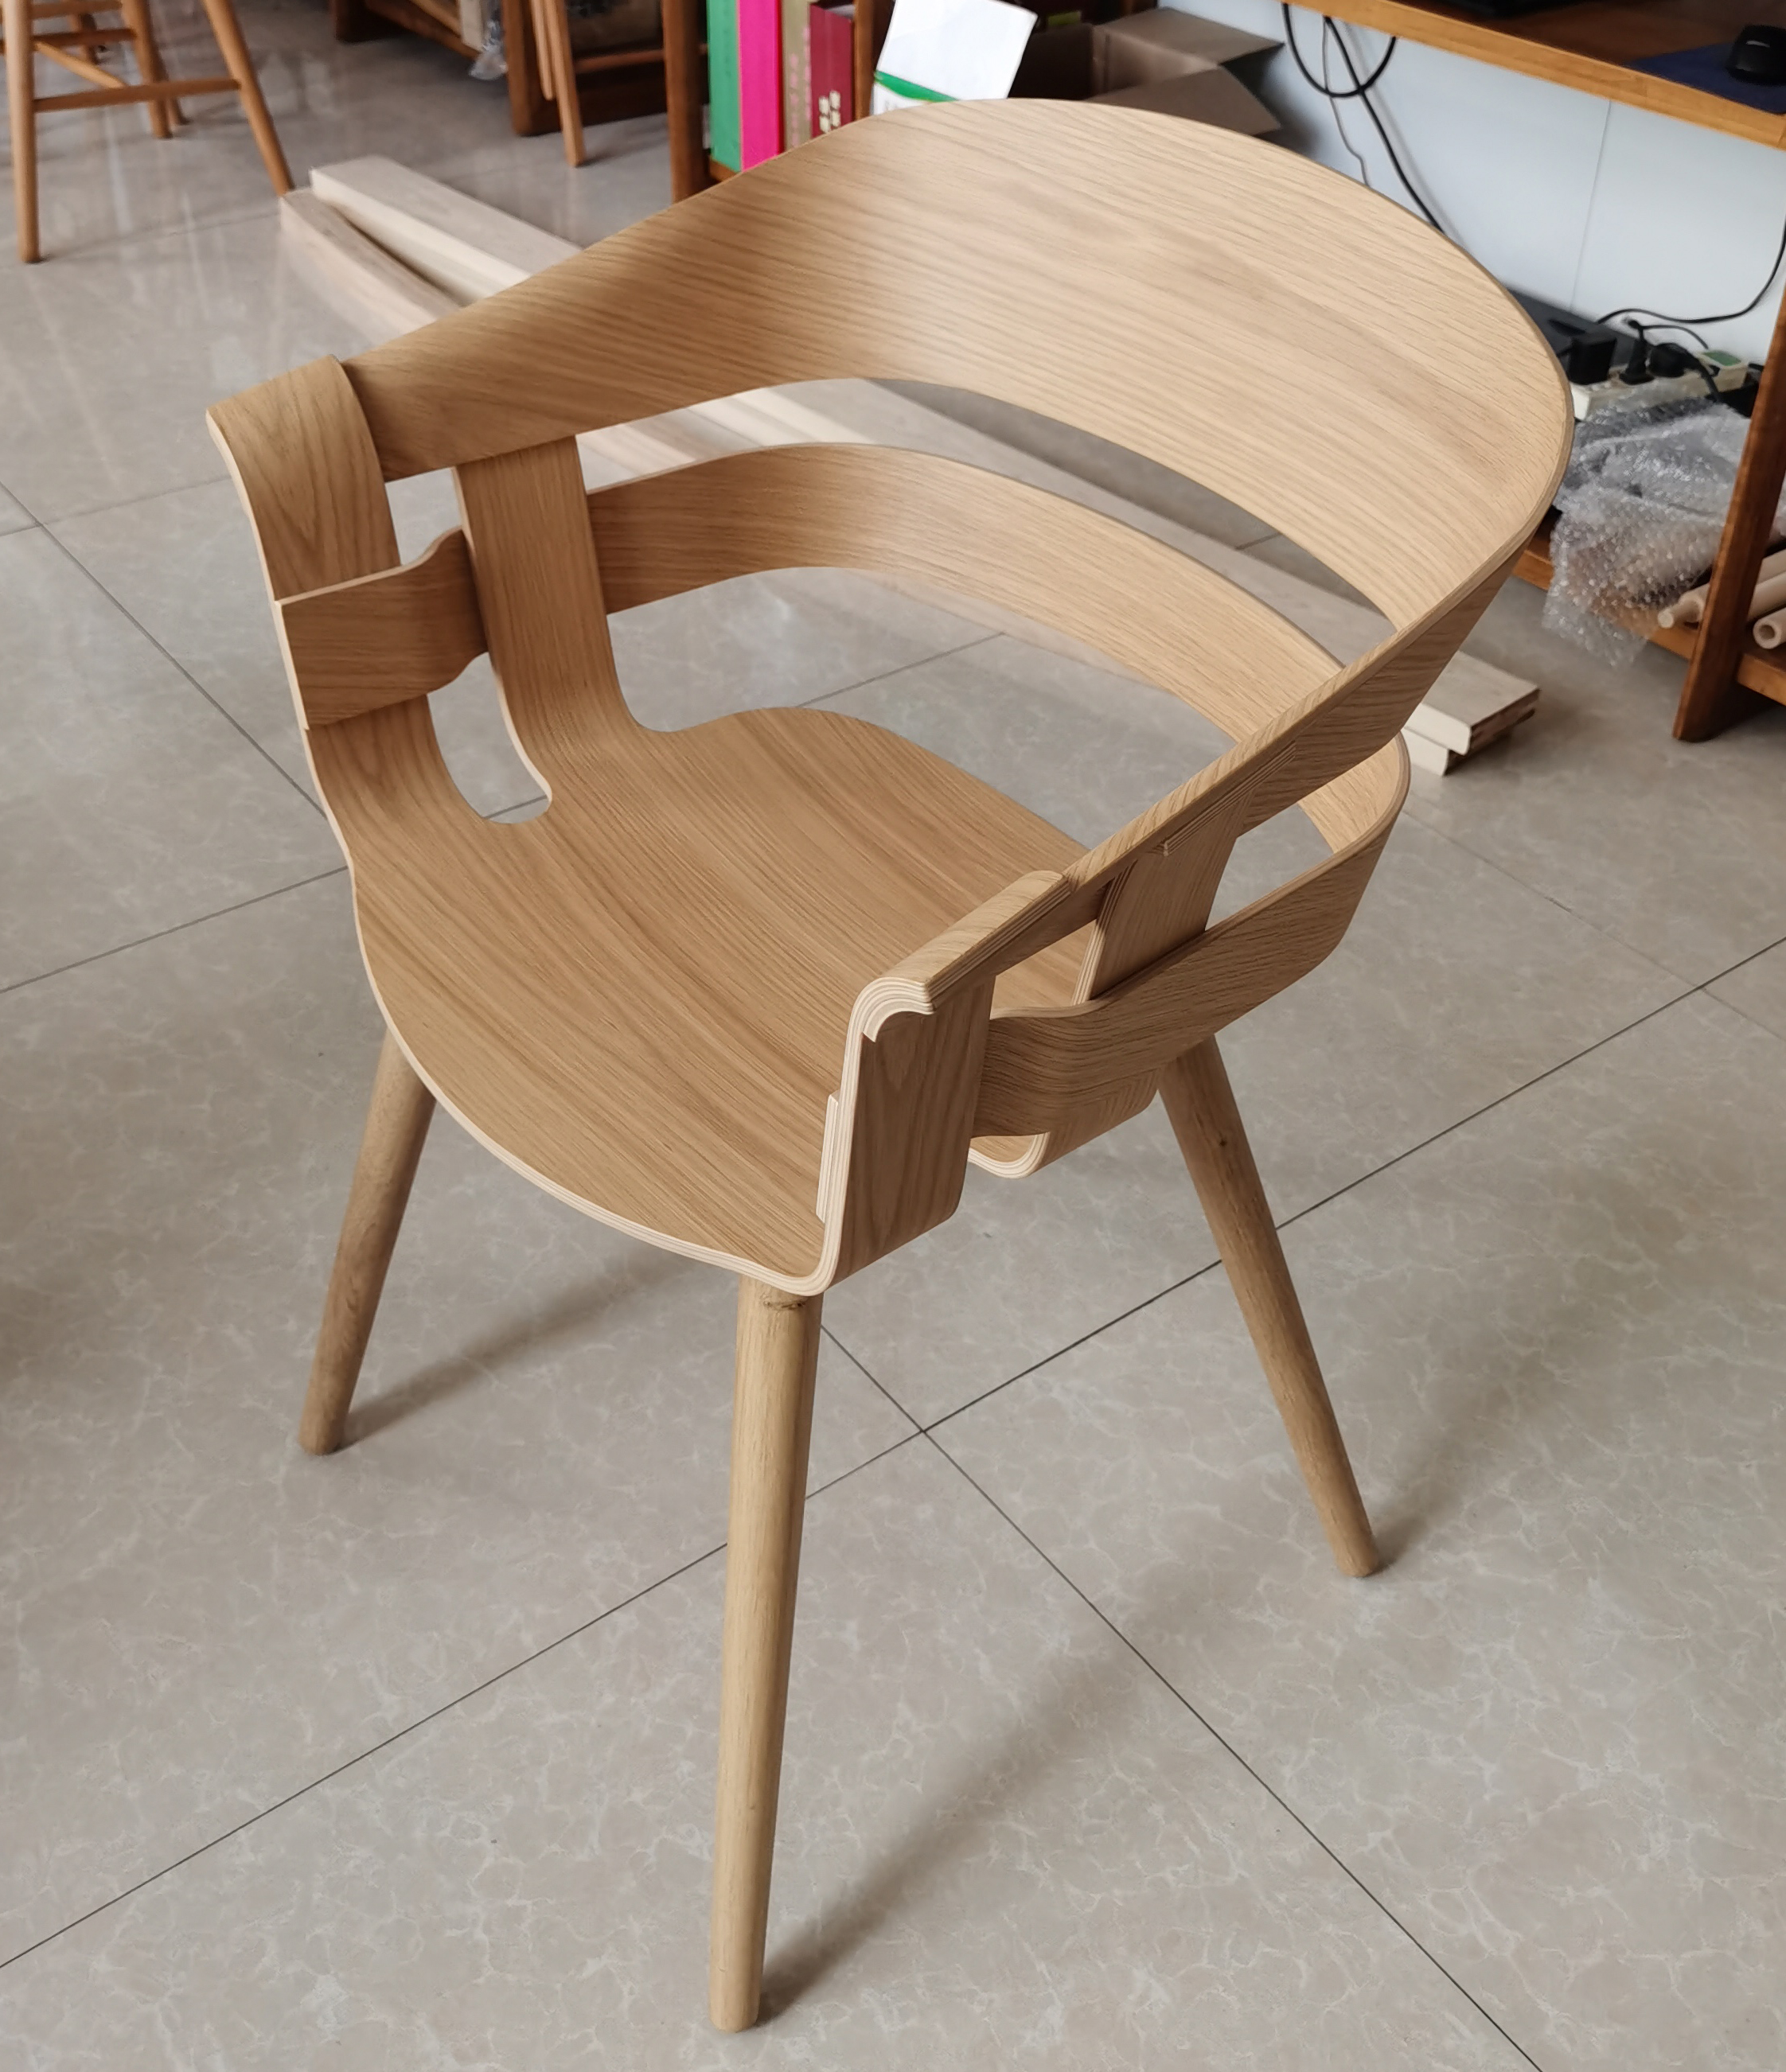 bent wooden chair